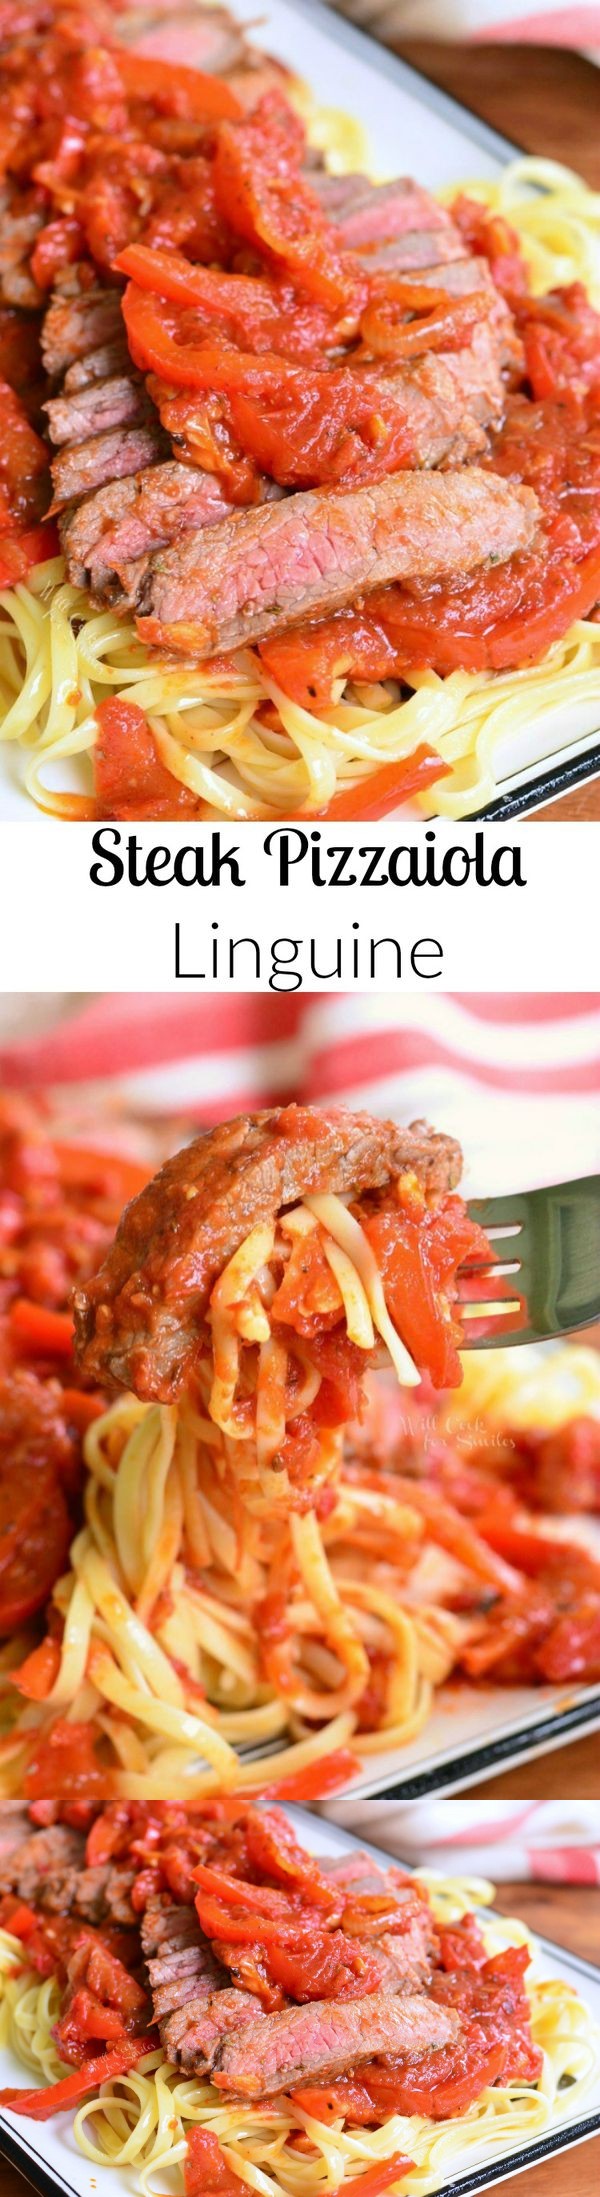 Steak Pizzaiola Linguine